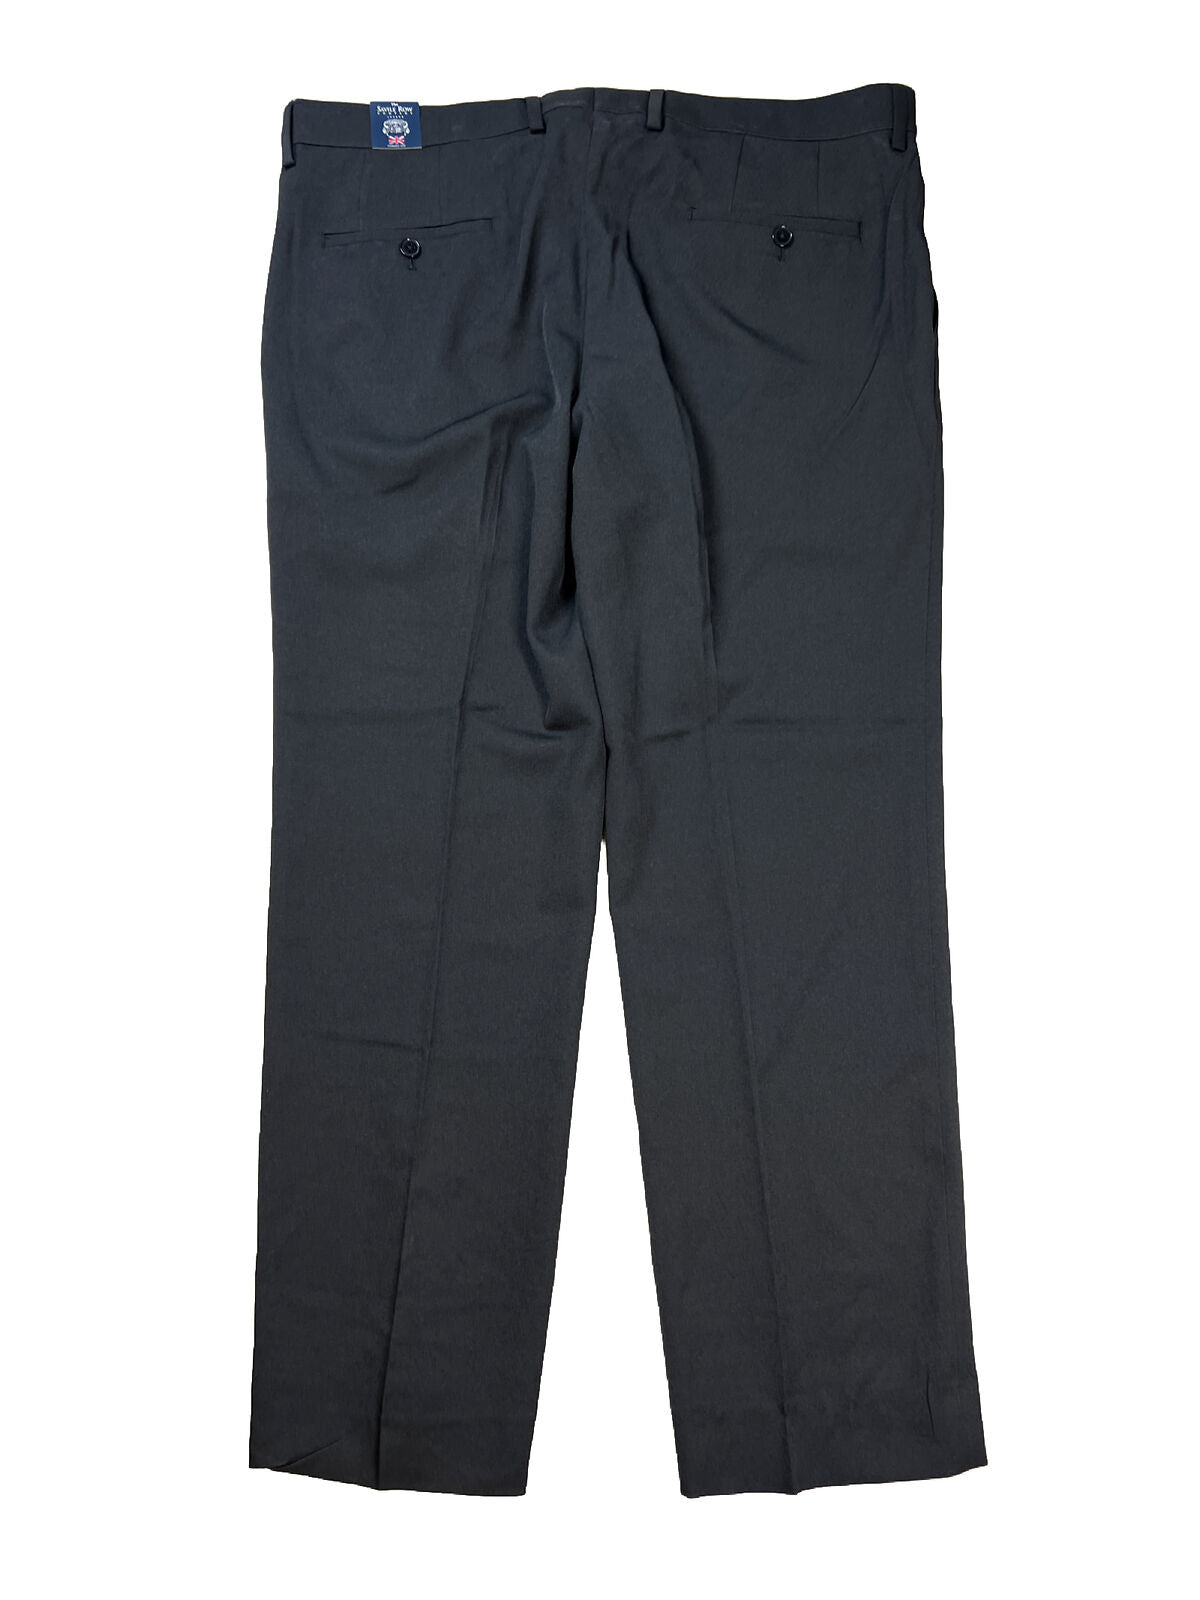 NEW The Savile Row Company Men's Black Straight Leg Dress Pants - 38X30